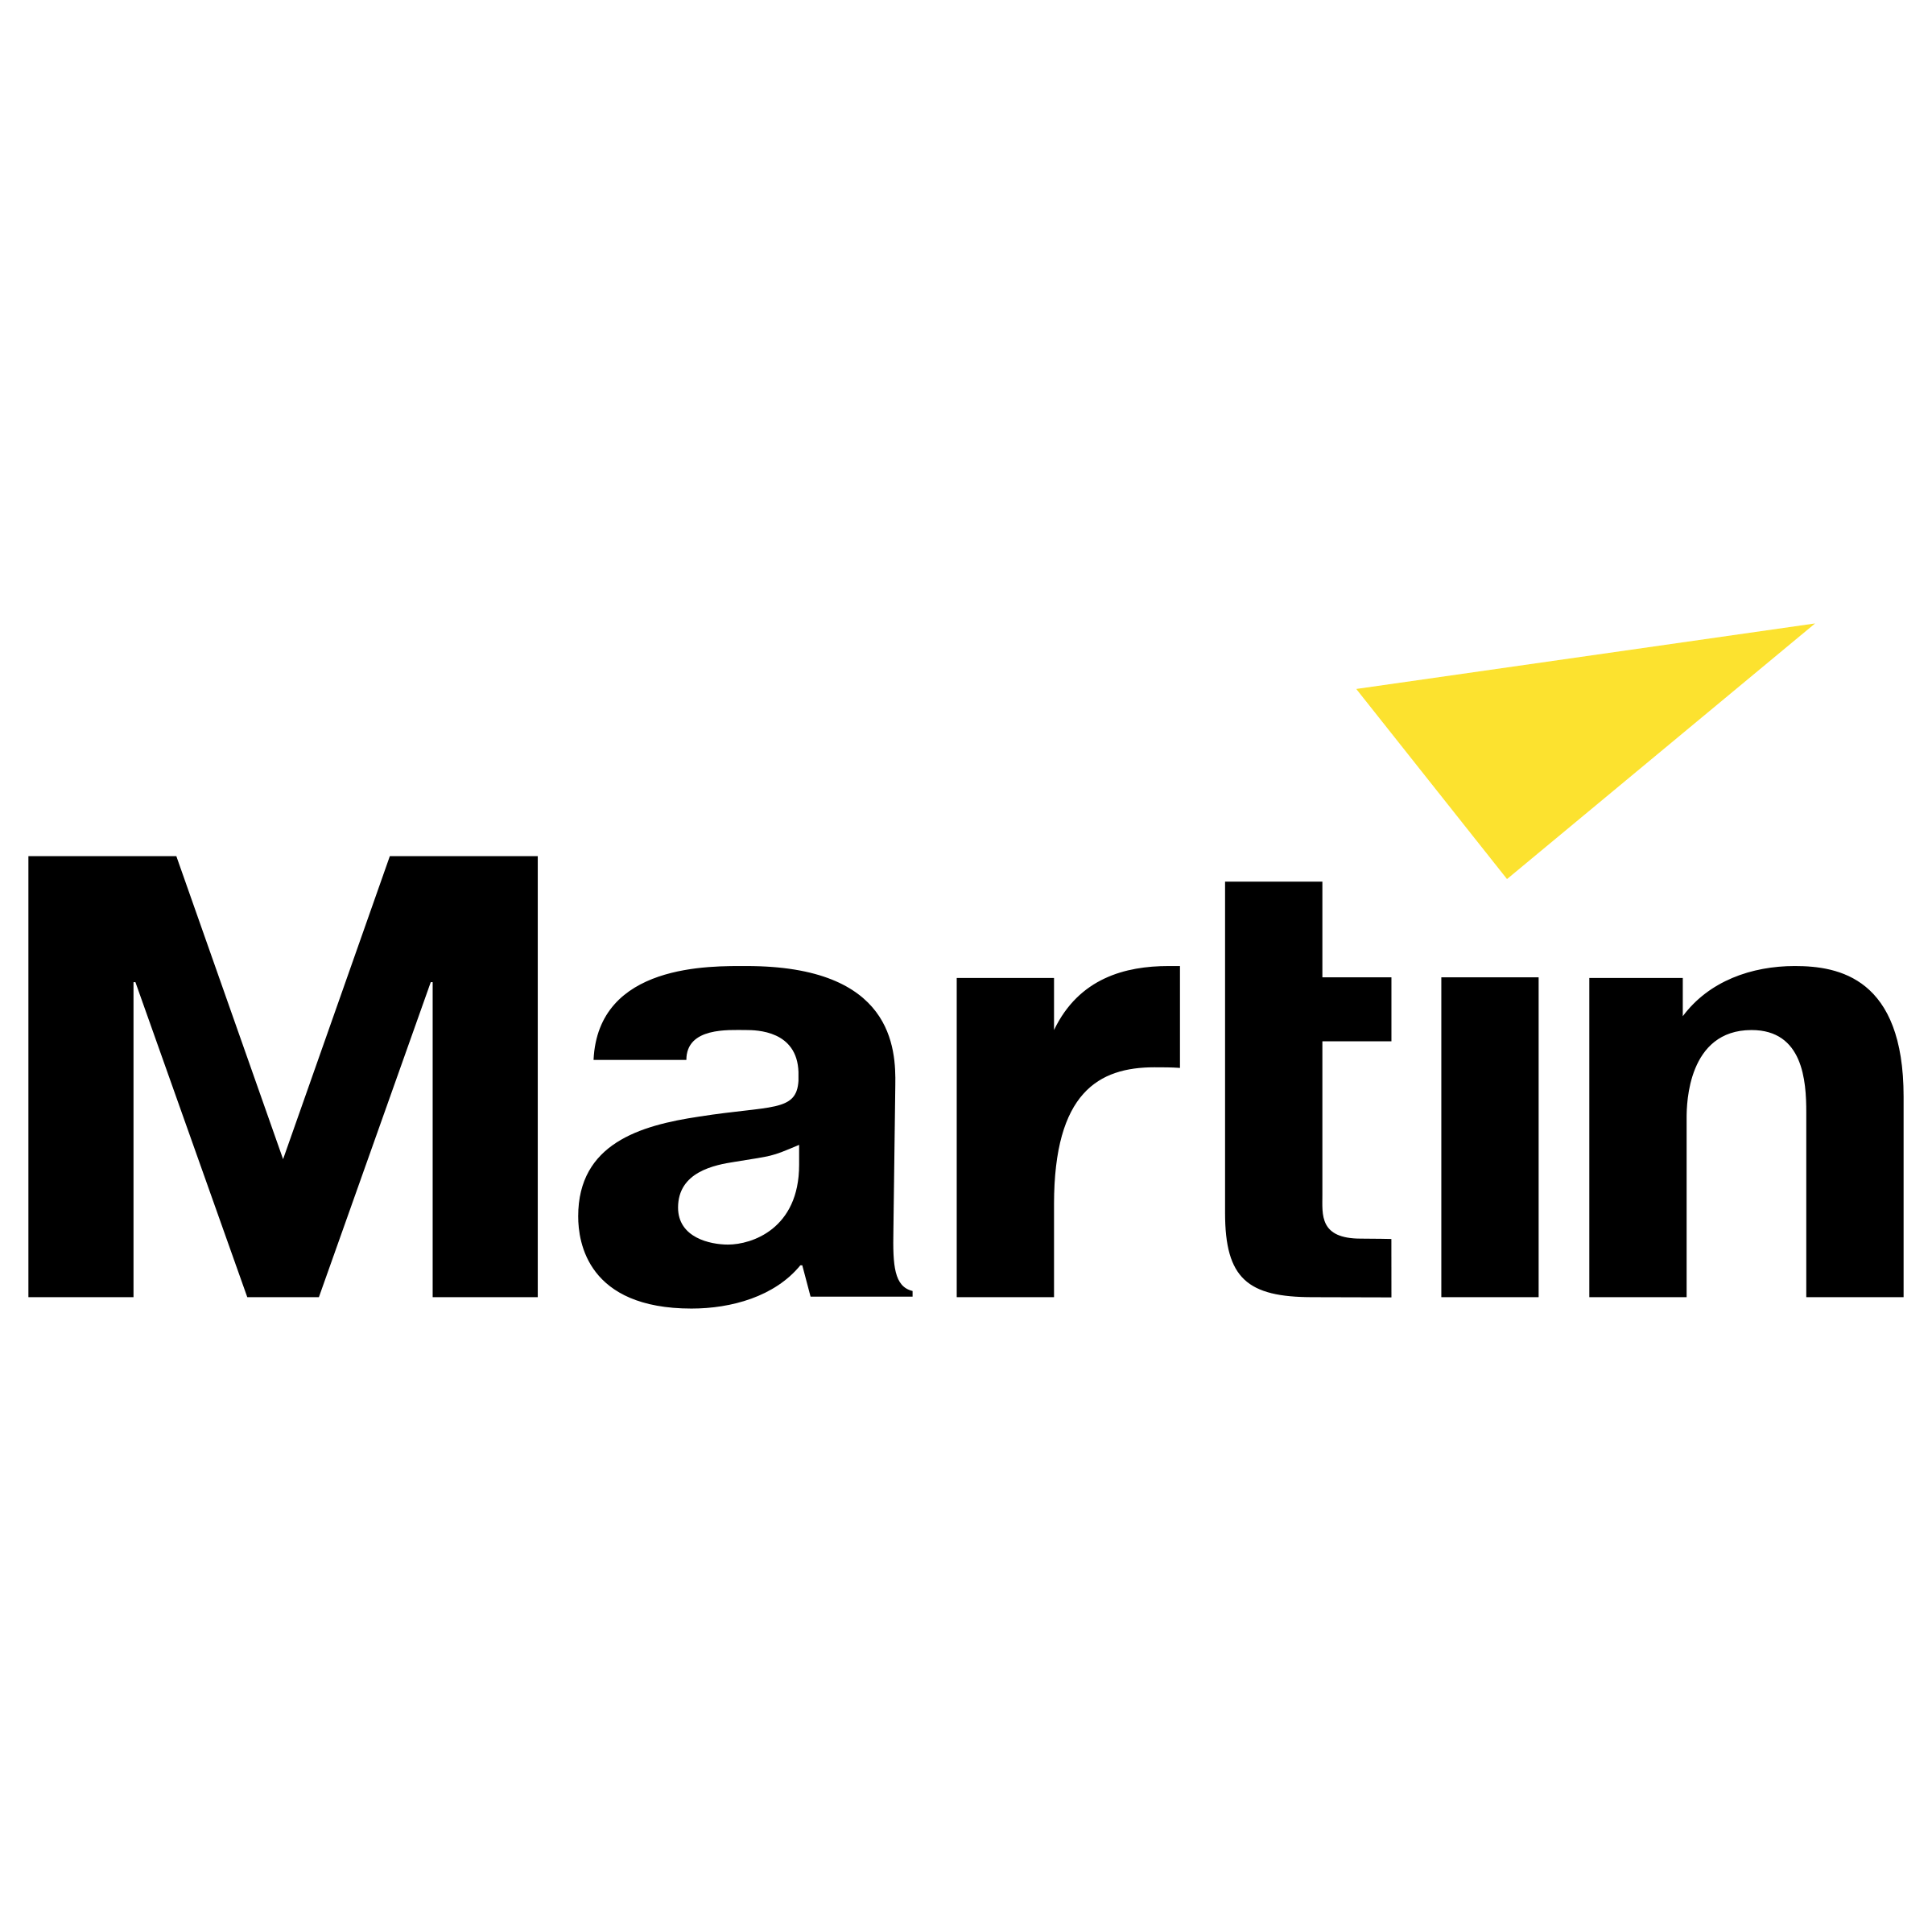 Martin Logo - Martin Logo PNG Transparent & SVG Vector - Freebie Supply